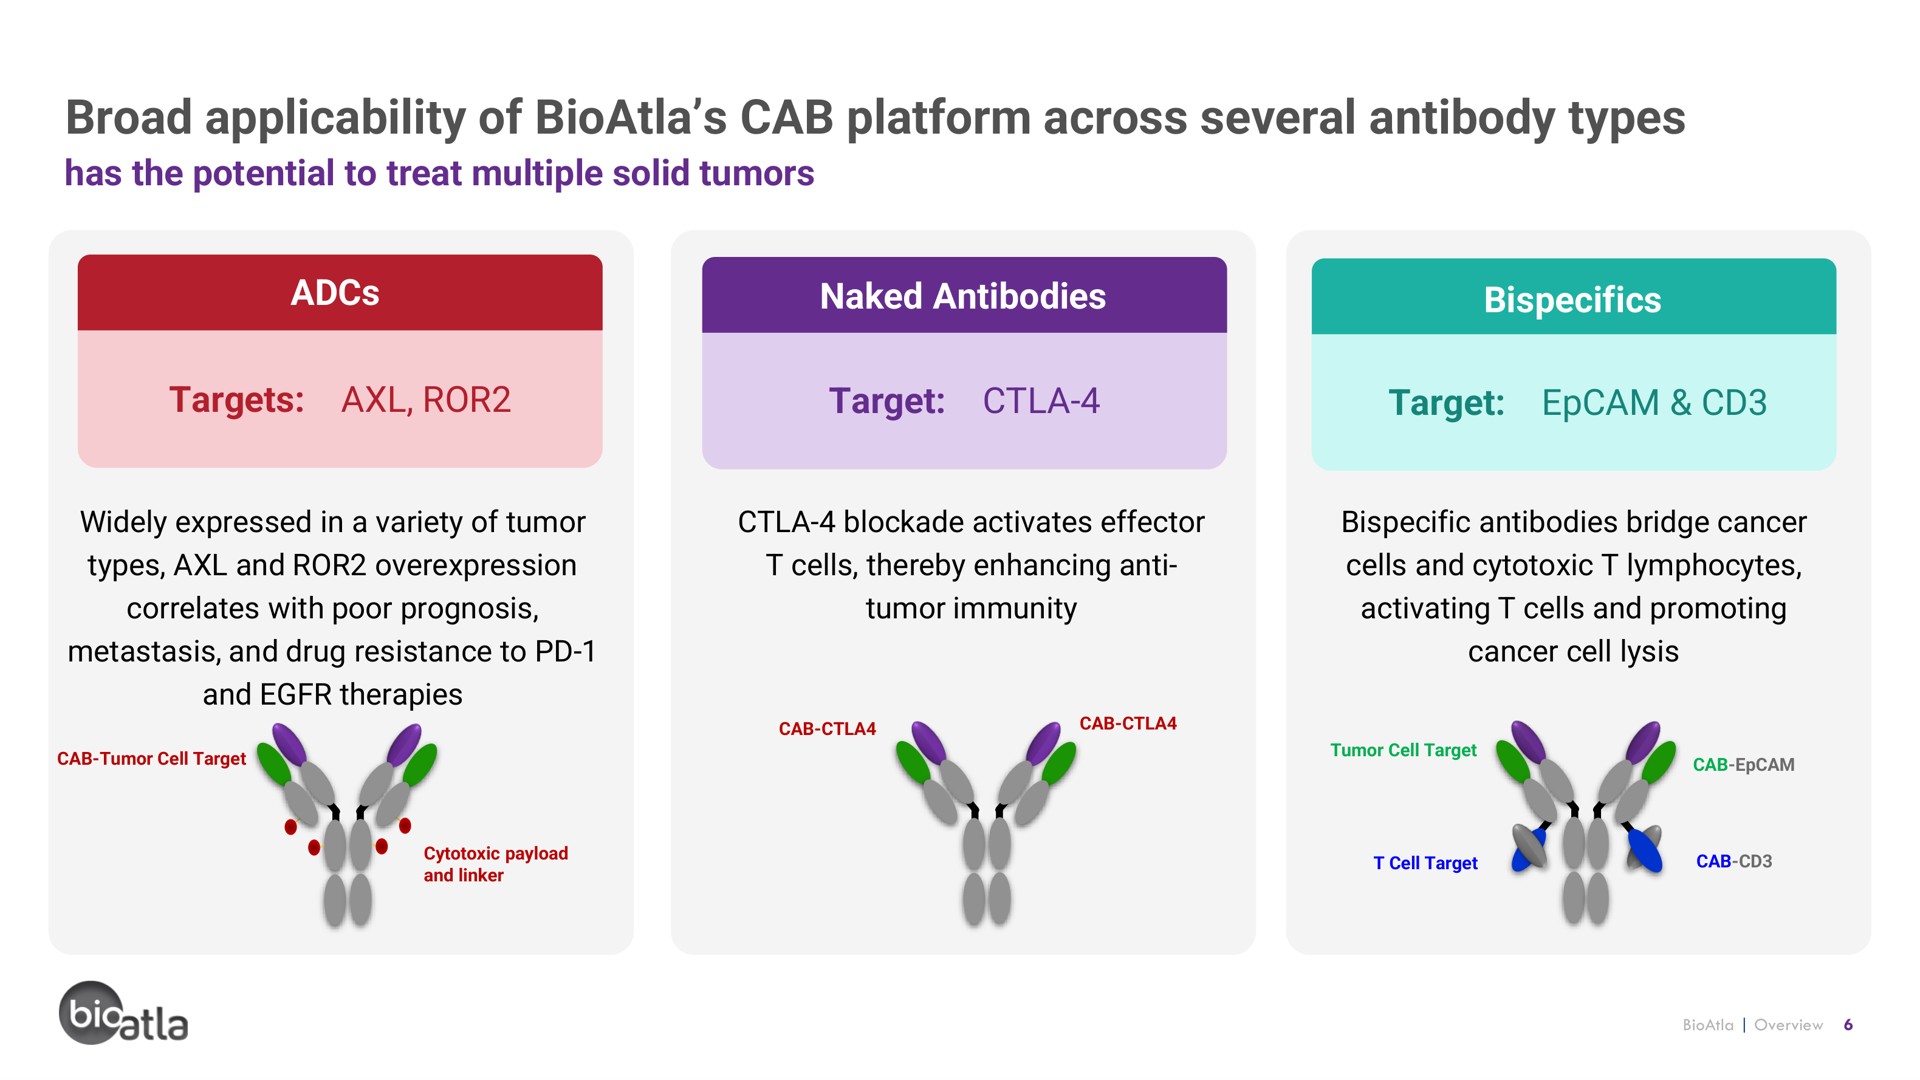 broad applicability of cab platform across several antibody types | BioAtla